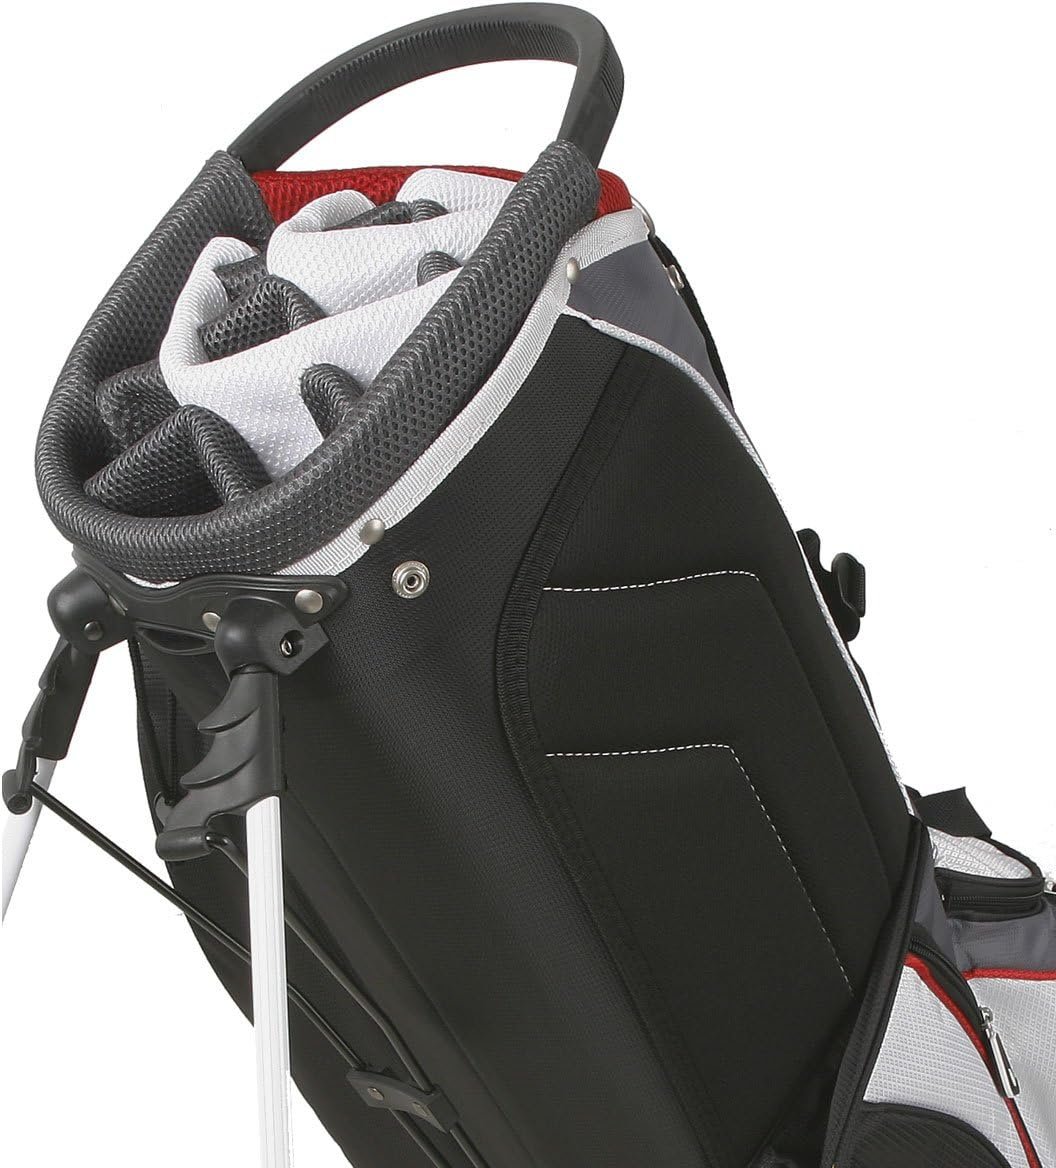 Golf Stand Bag Review: PowerBilt vs Callaway vs Nike vs Big Max